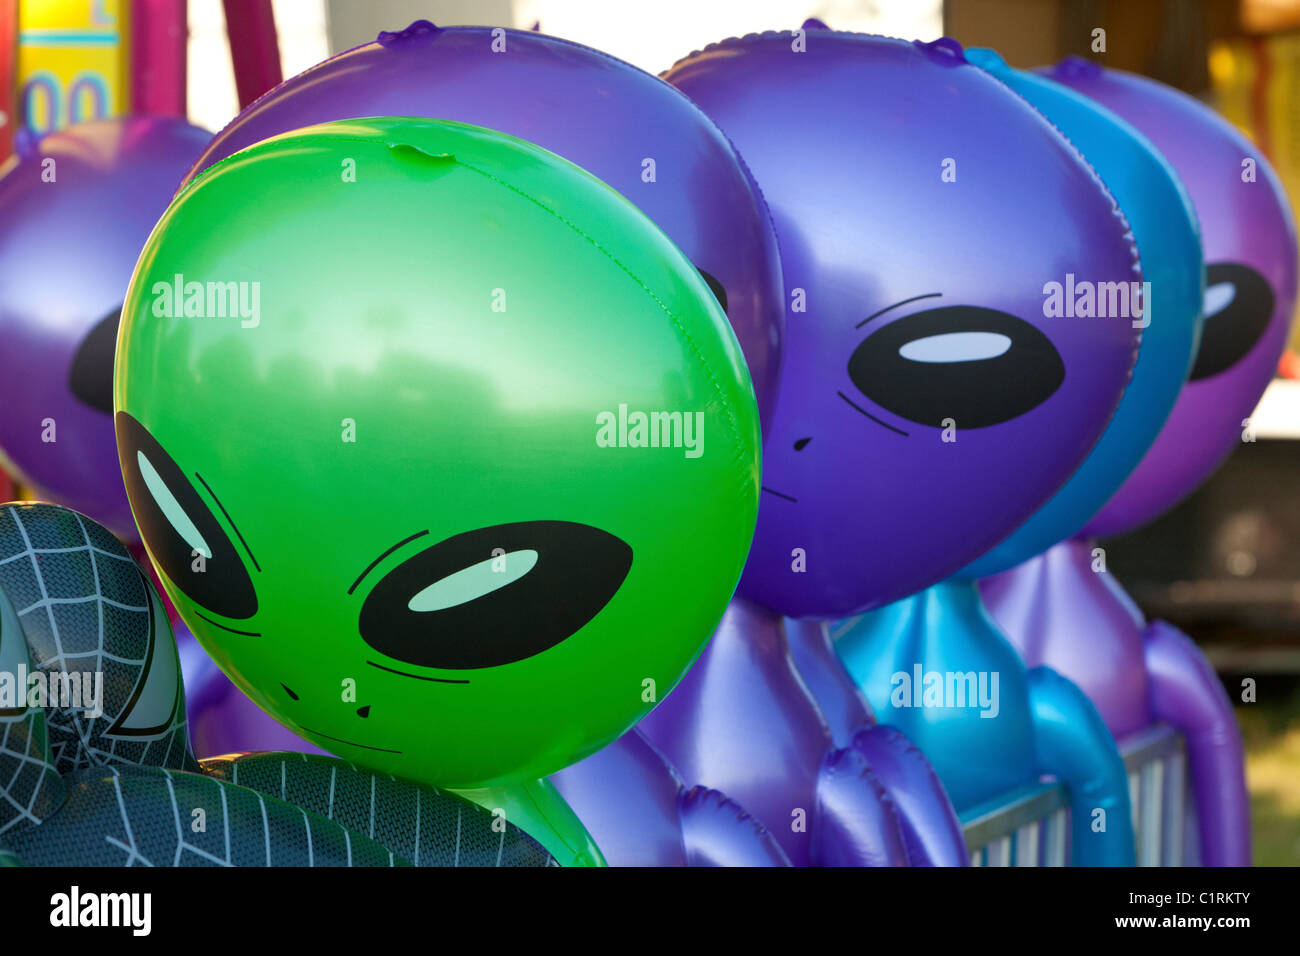 ufo alien invasion inflatable